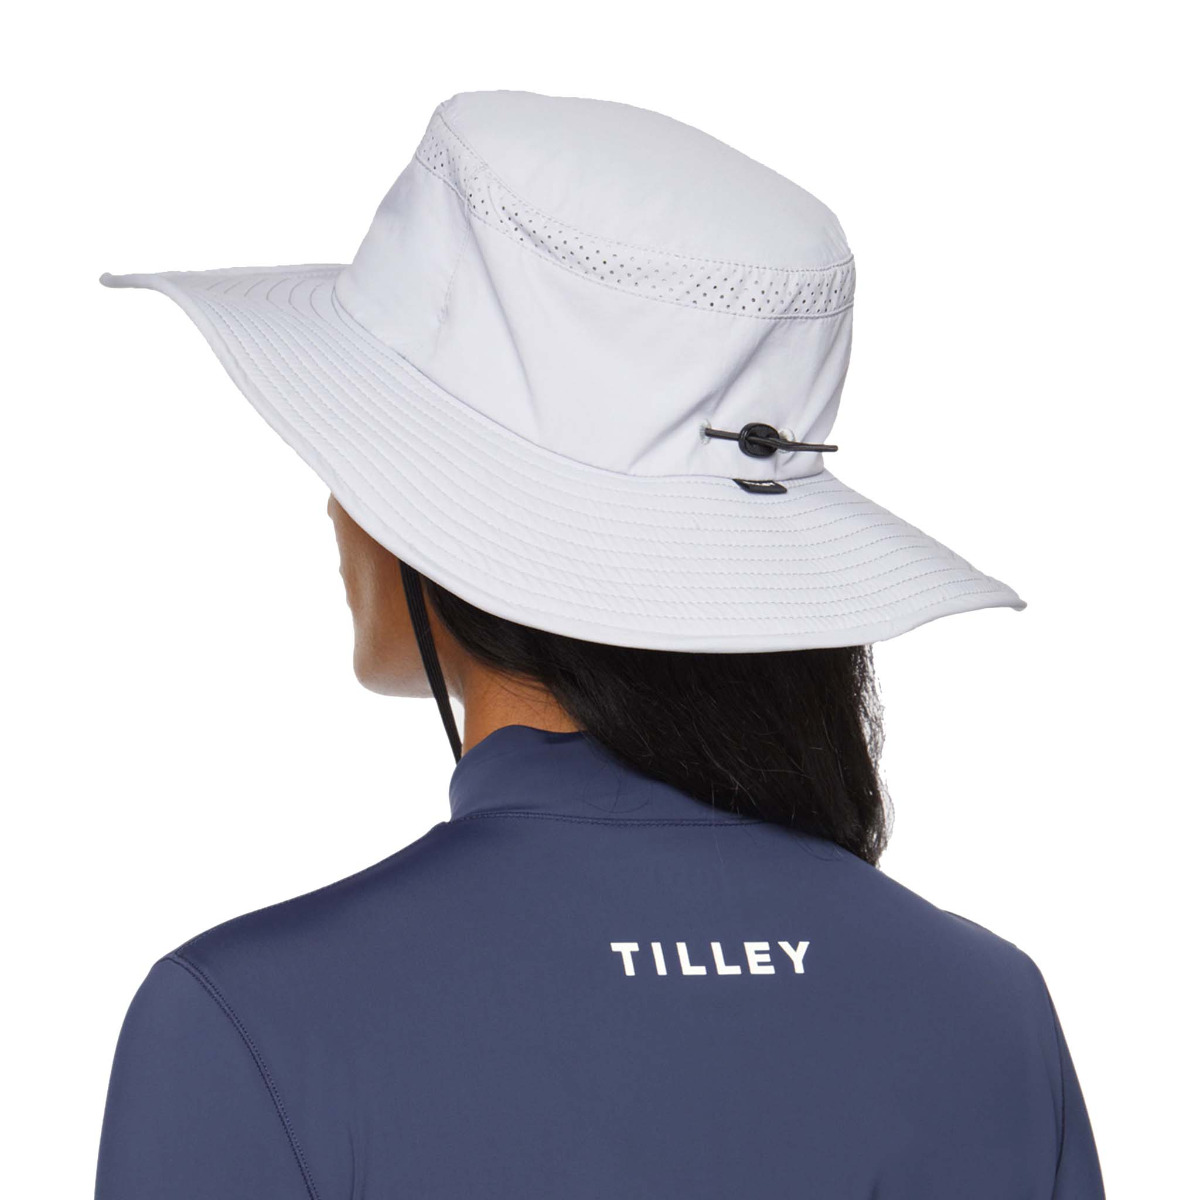 TILLEY DUNES SOLAR ECLIPSE HAT 